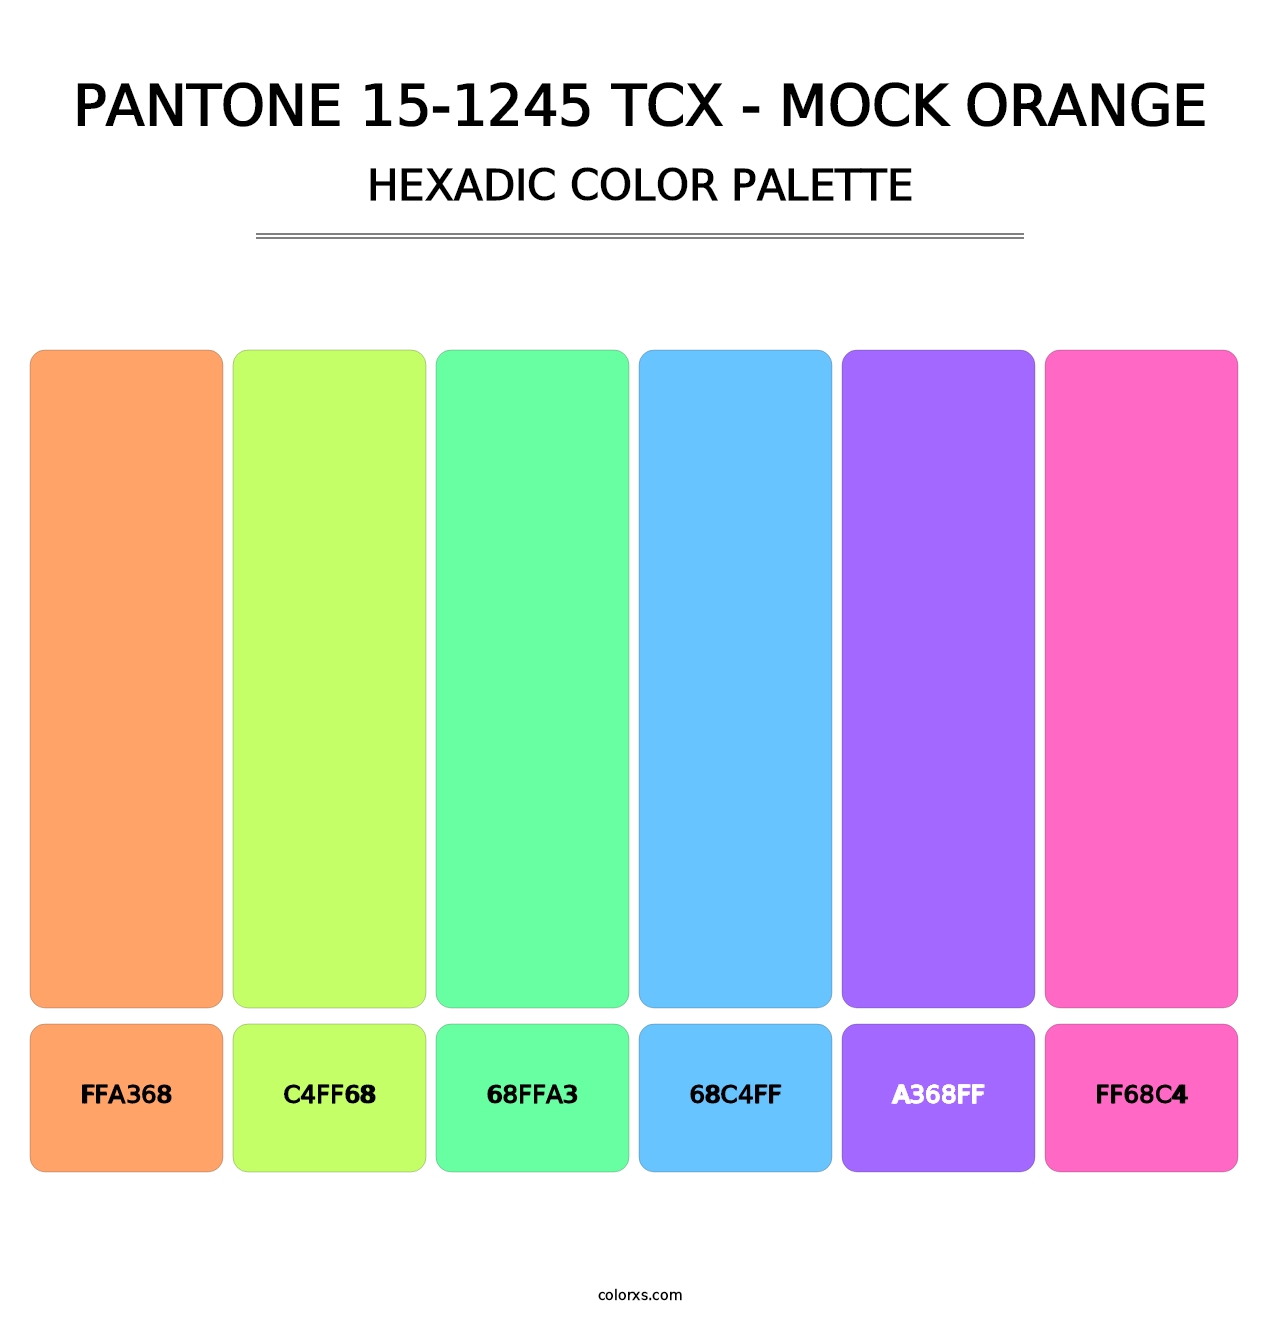 PANTONE 15-1245 TCX - Mock Orange - Hexadic Color Palette